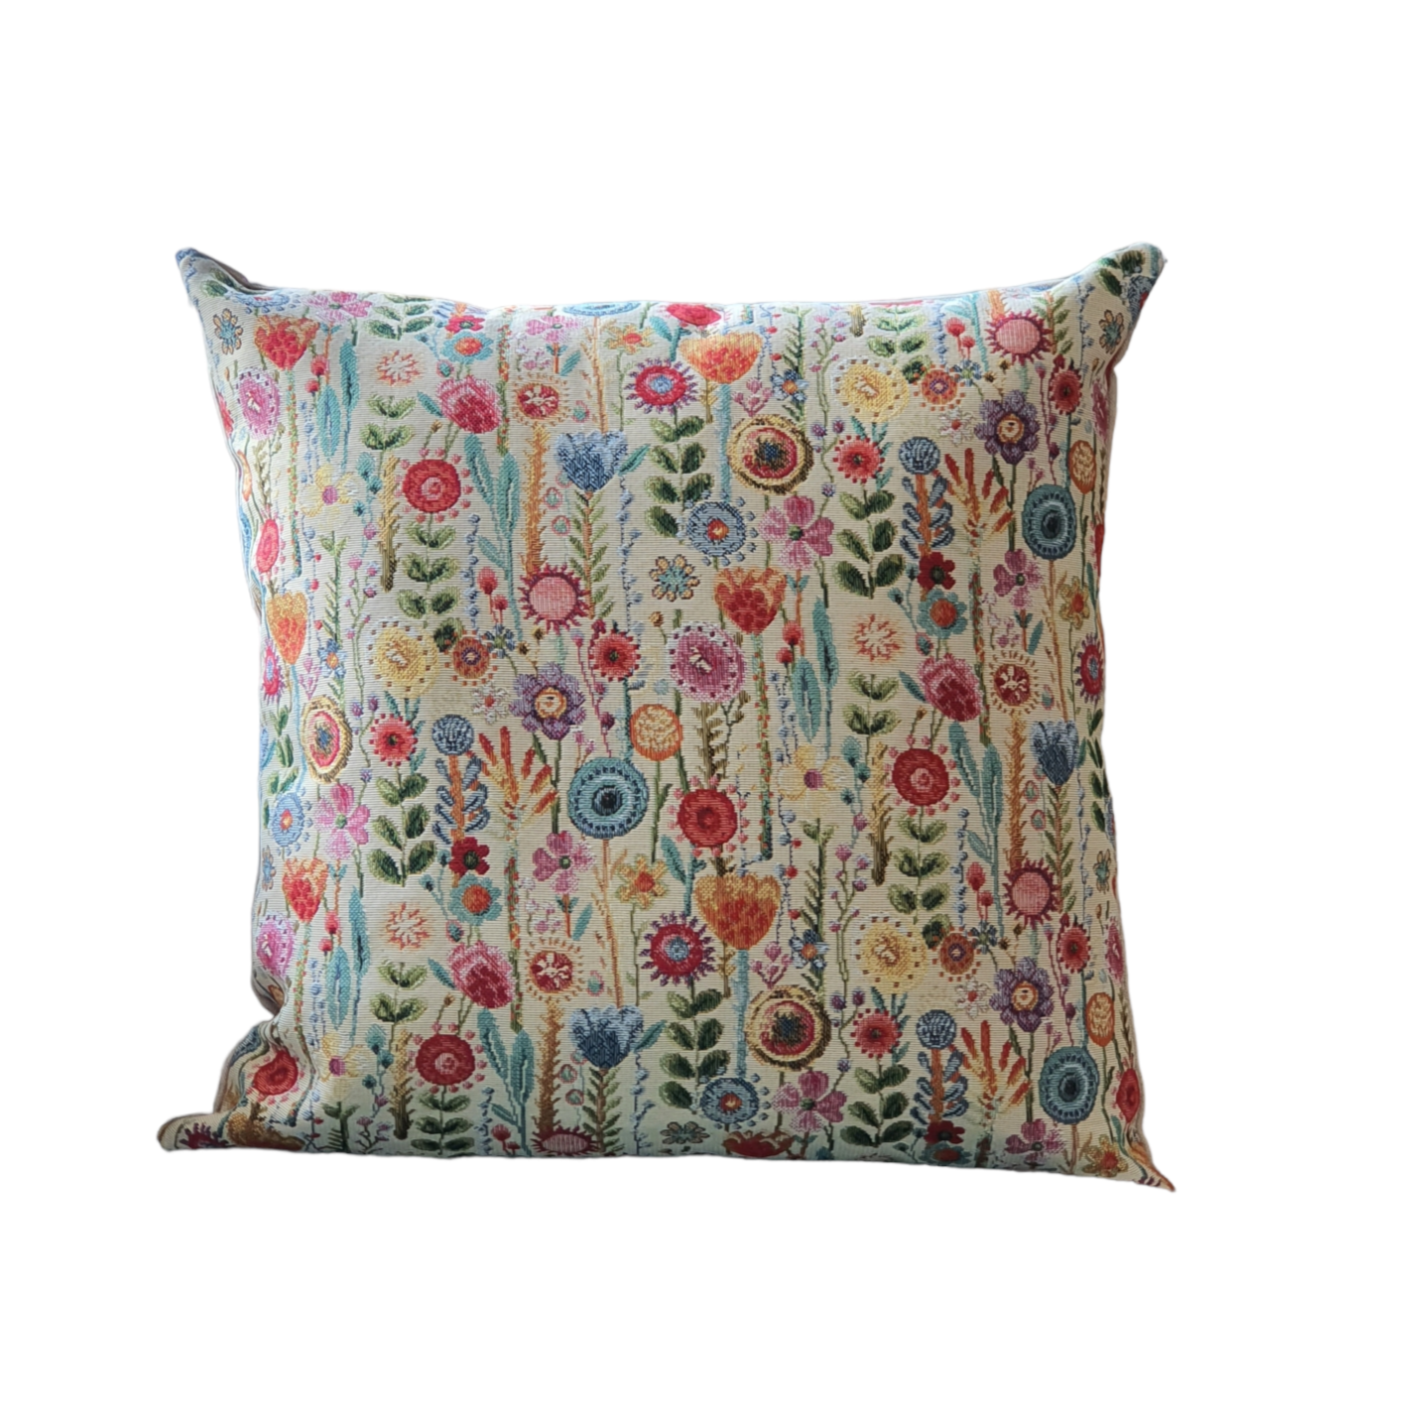 Kew Gardens Fabric - Handmade Floral Cushion Cover